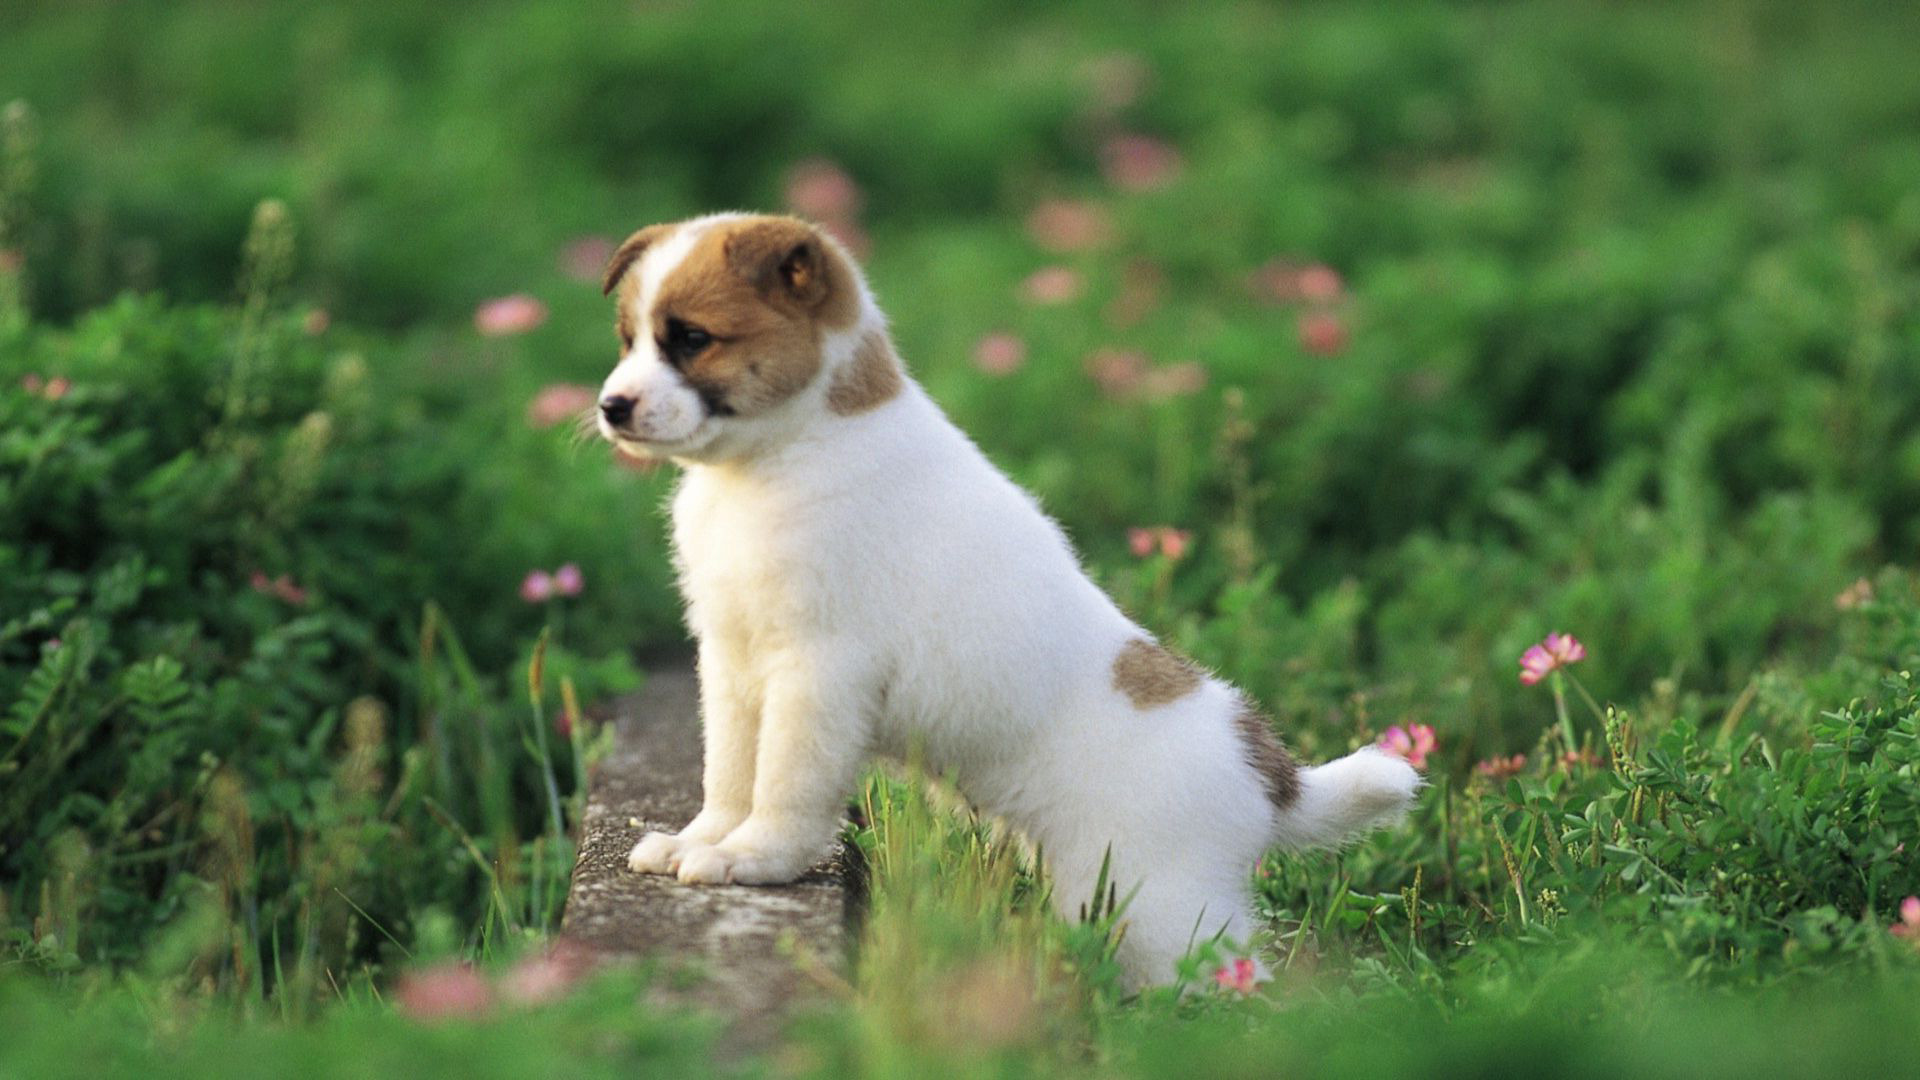 Cute Puppy Images Free Download Cute Puppy Wallpaper Wallpapers Hd Pixelstalk Bodenowasude